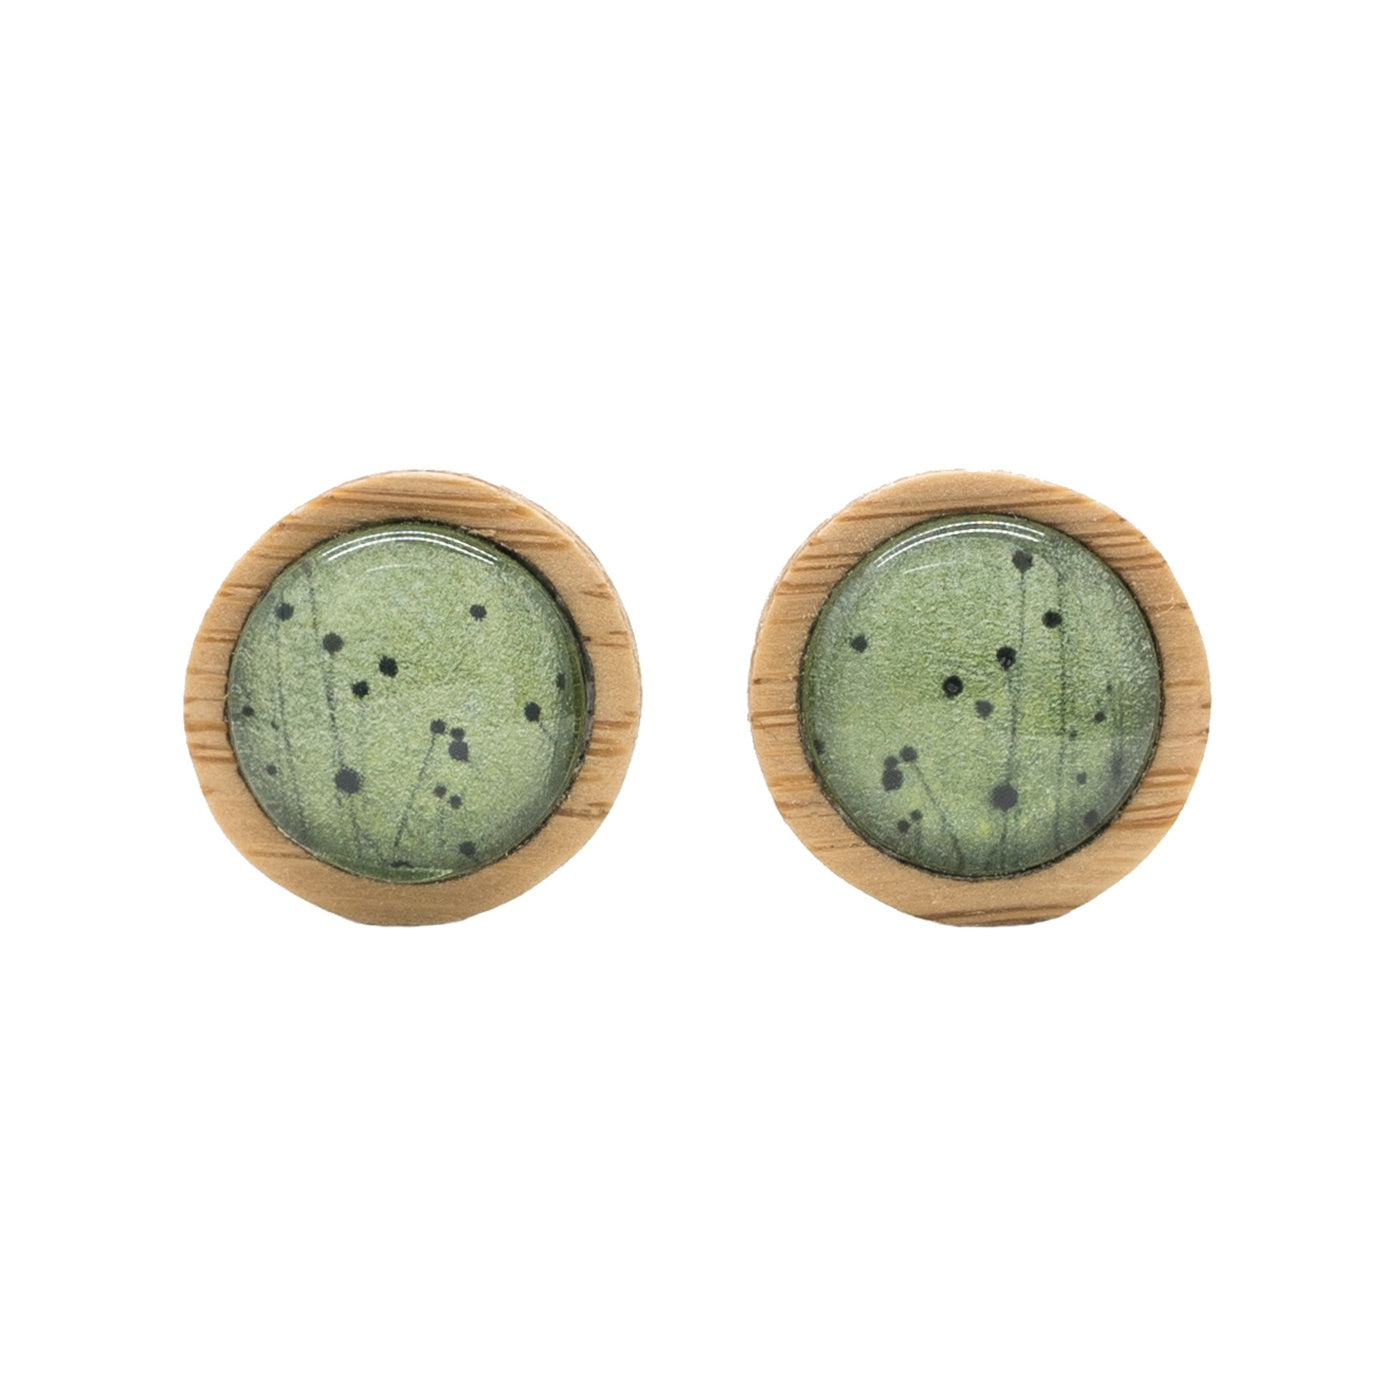 Myrtle & Me - Stud Earrings - Buttongrass - Metallic Green